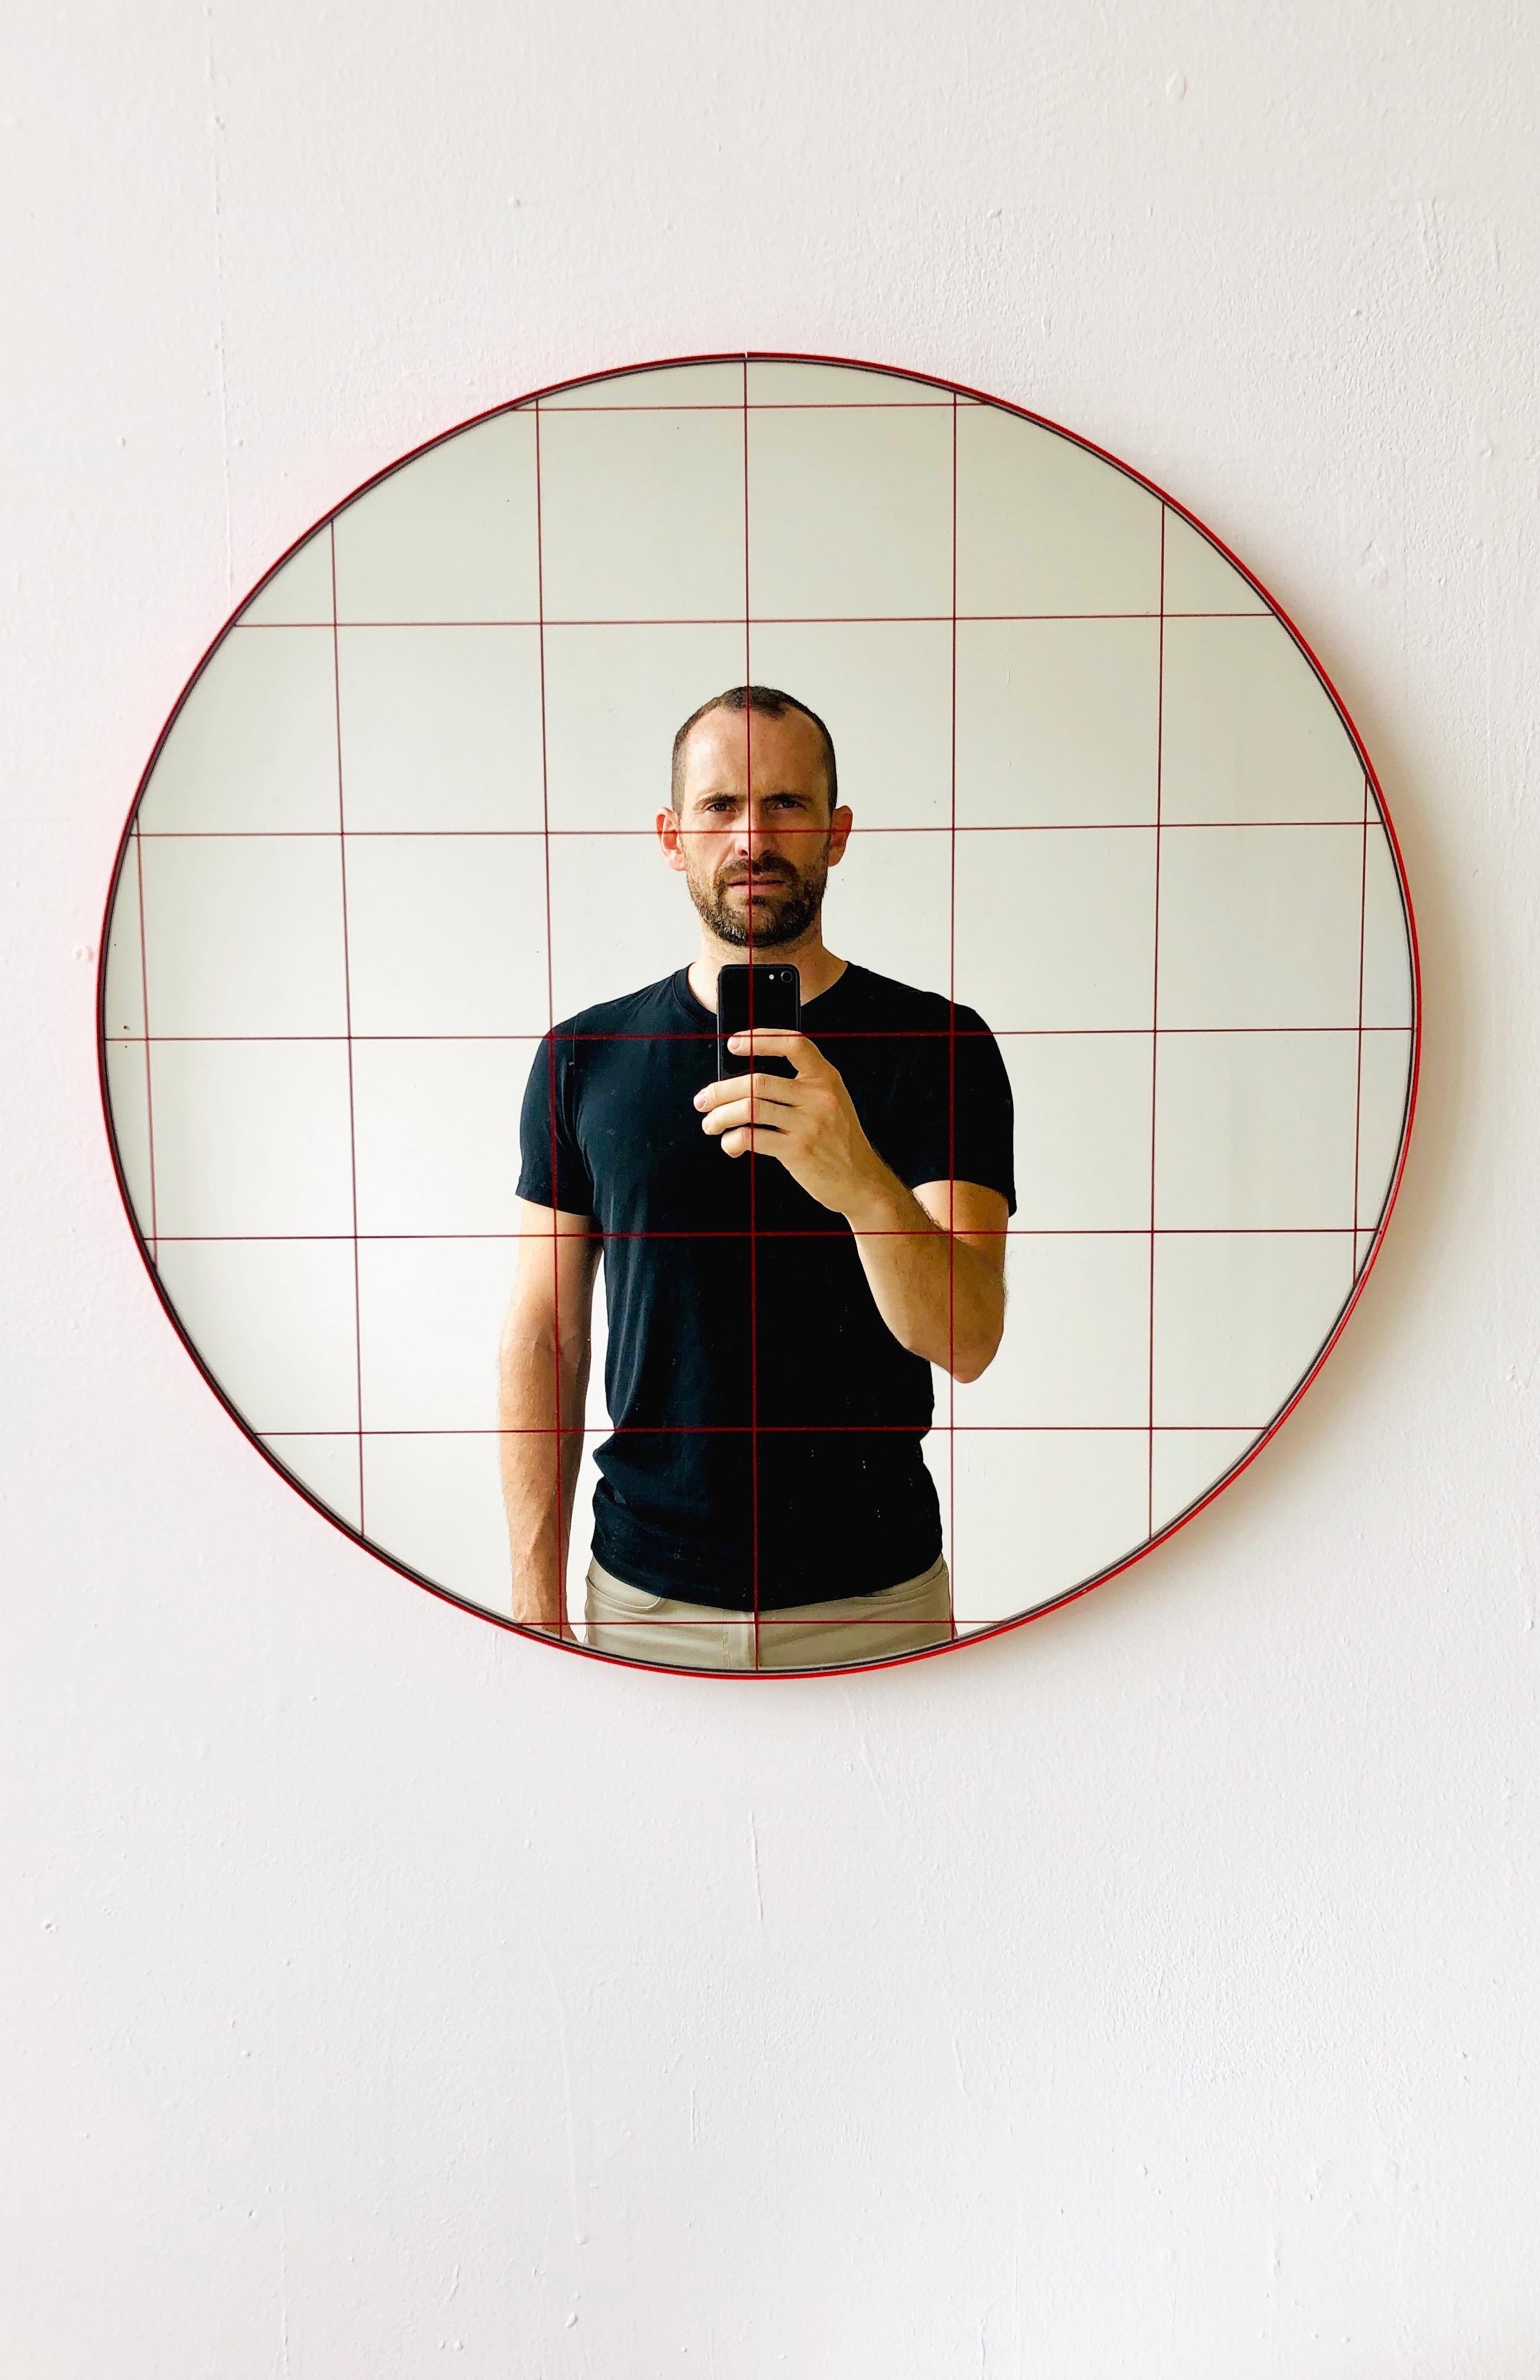 British Orbis Red Grid Round Contemporary Sandblasted Mirror with Red Frame, XL